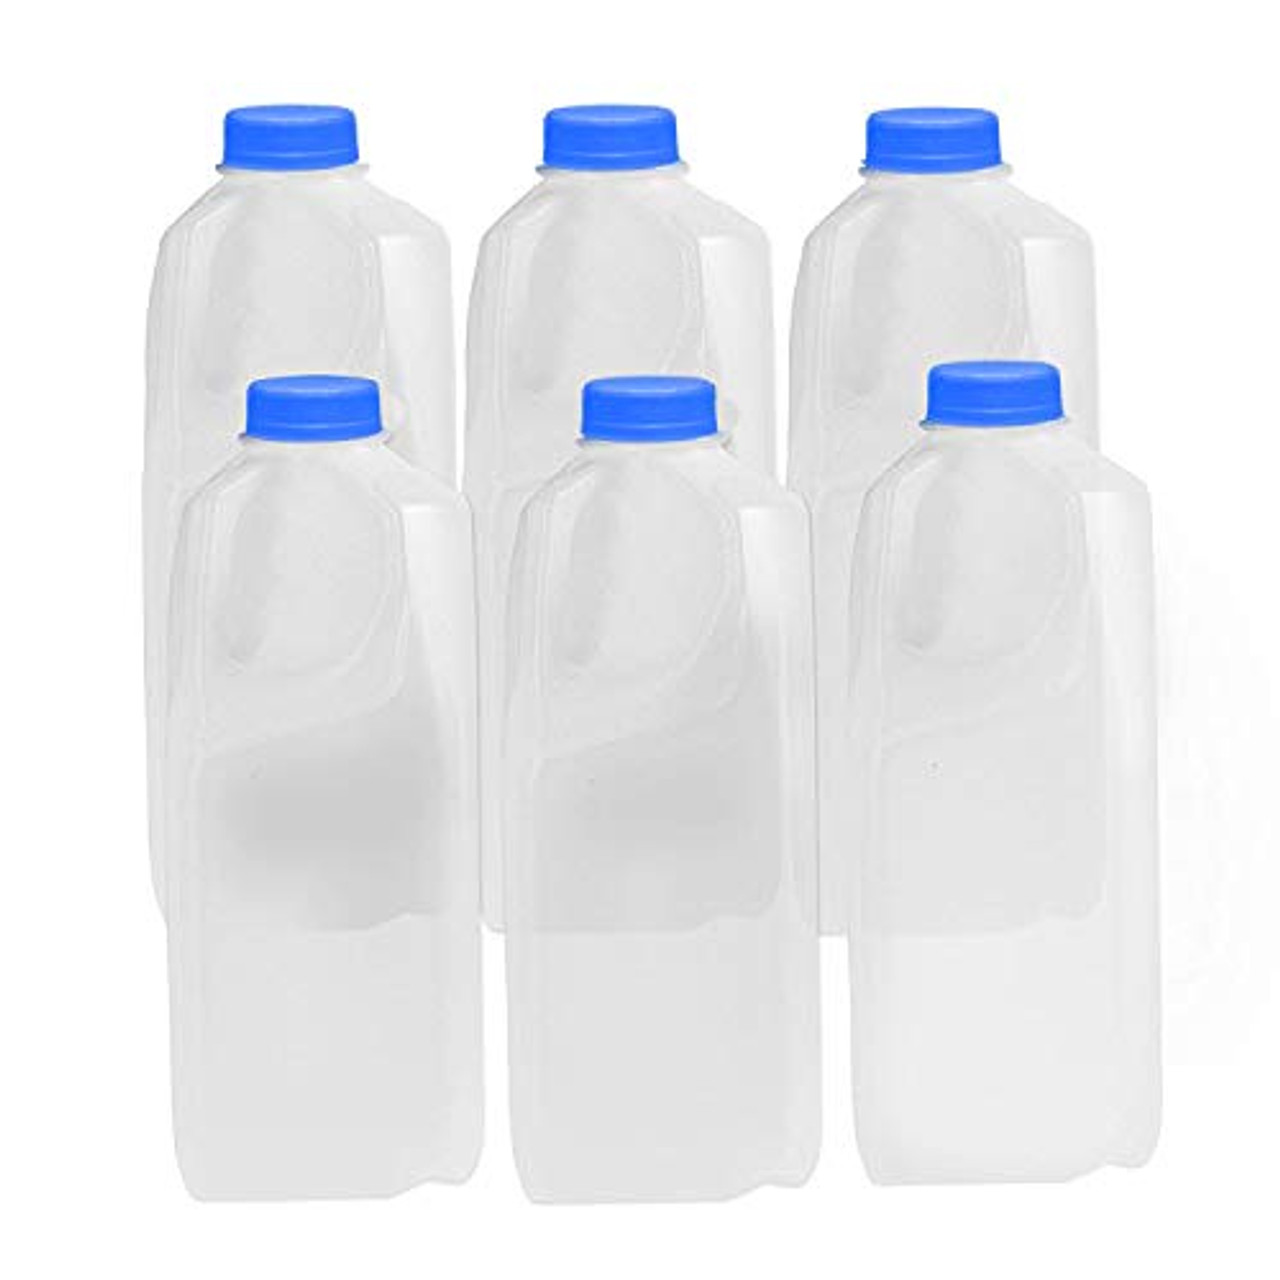 1 Gallon Plastic Jug with Lid for Water, Milk, Juice or Liquids, 2